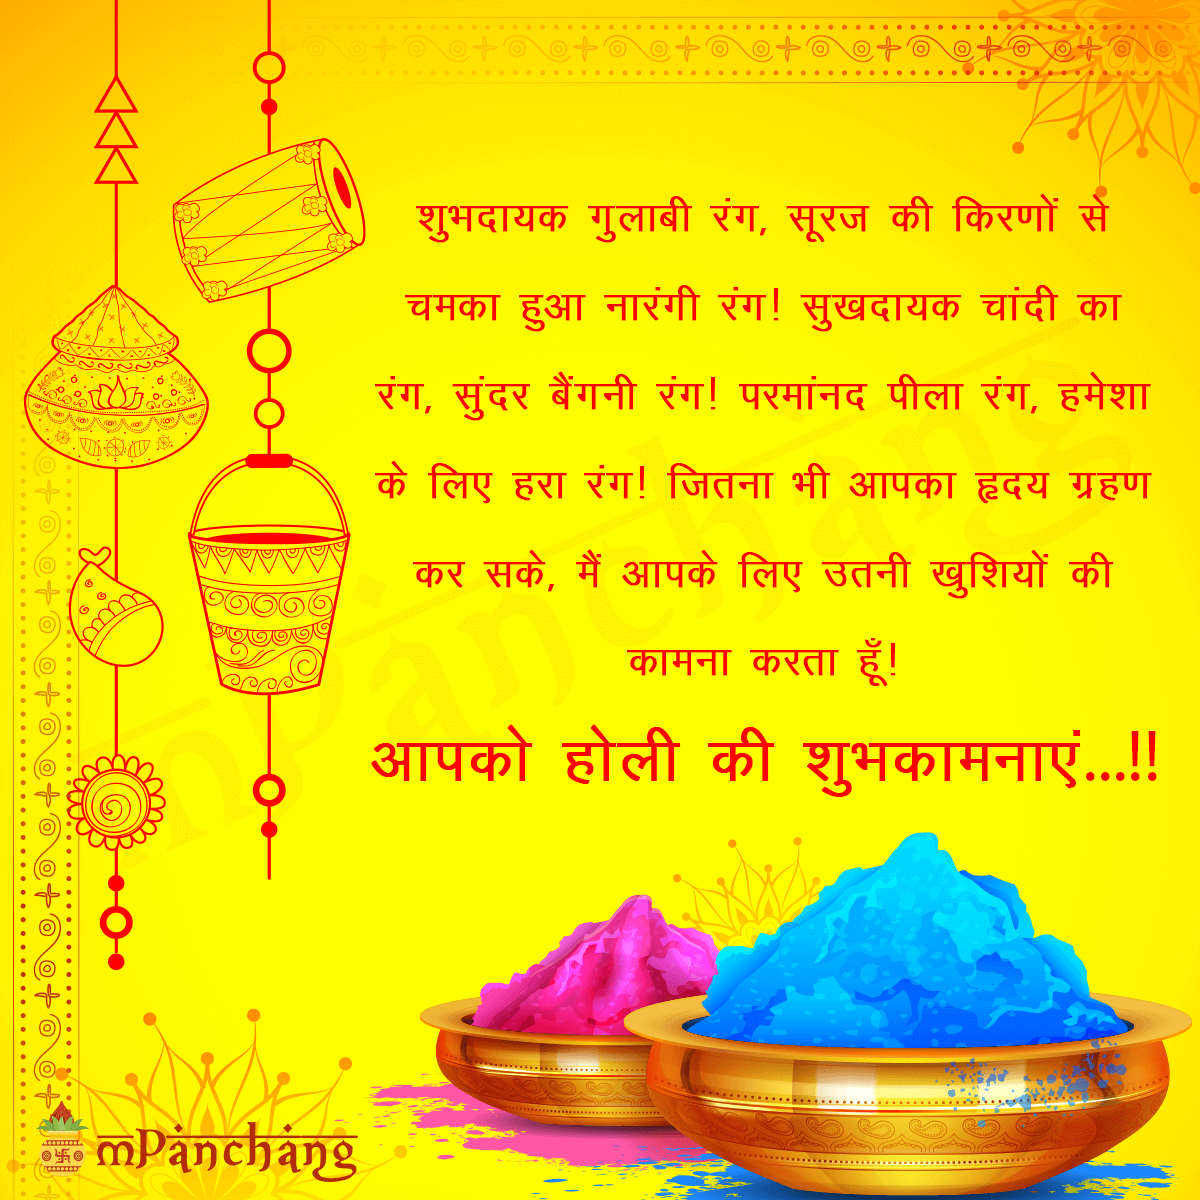 happy holi quotes in hindi